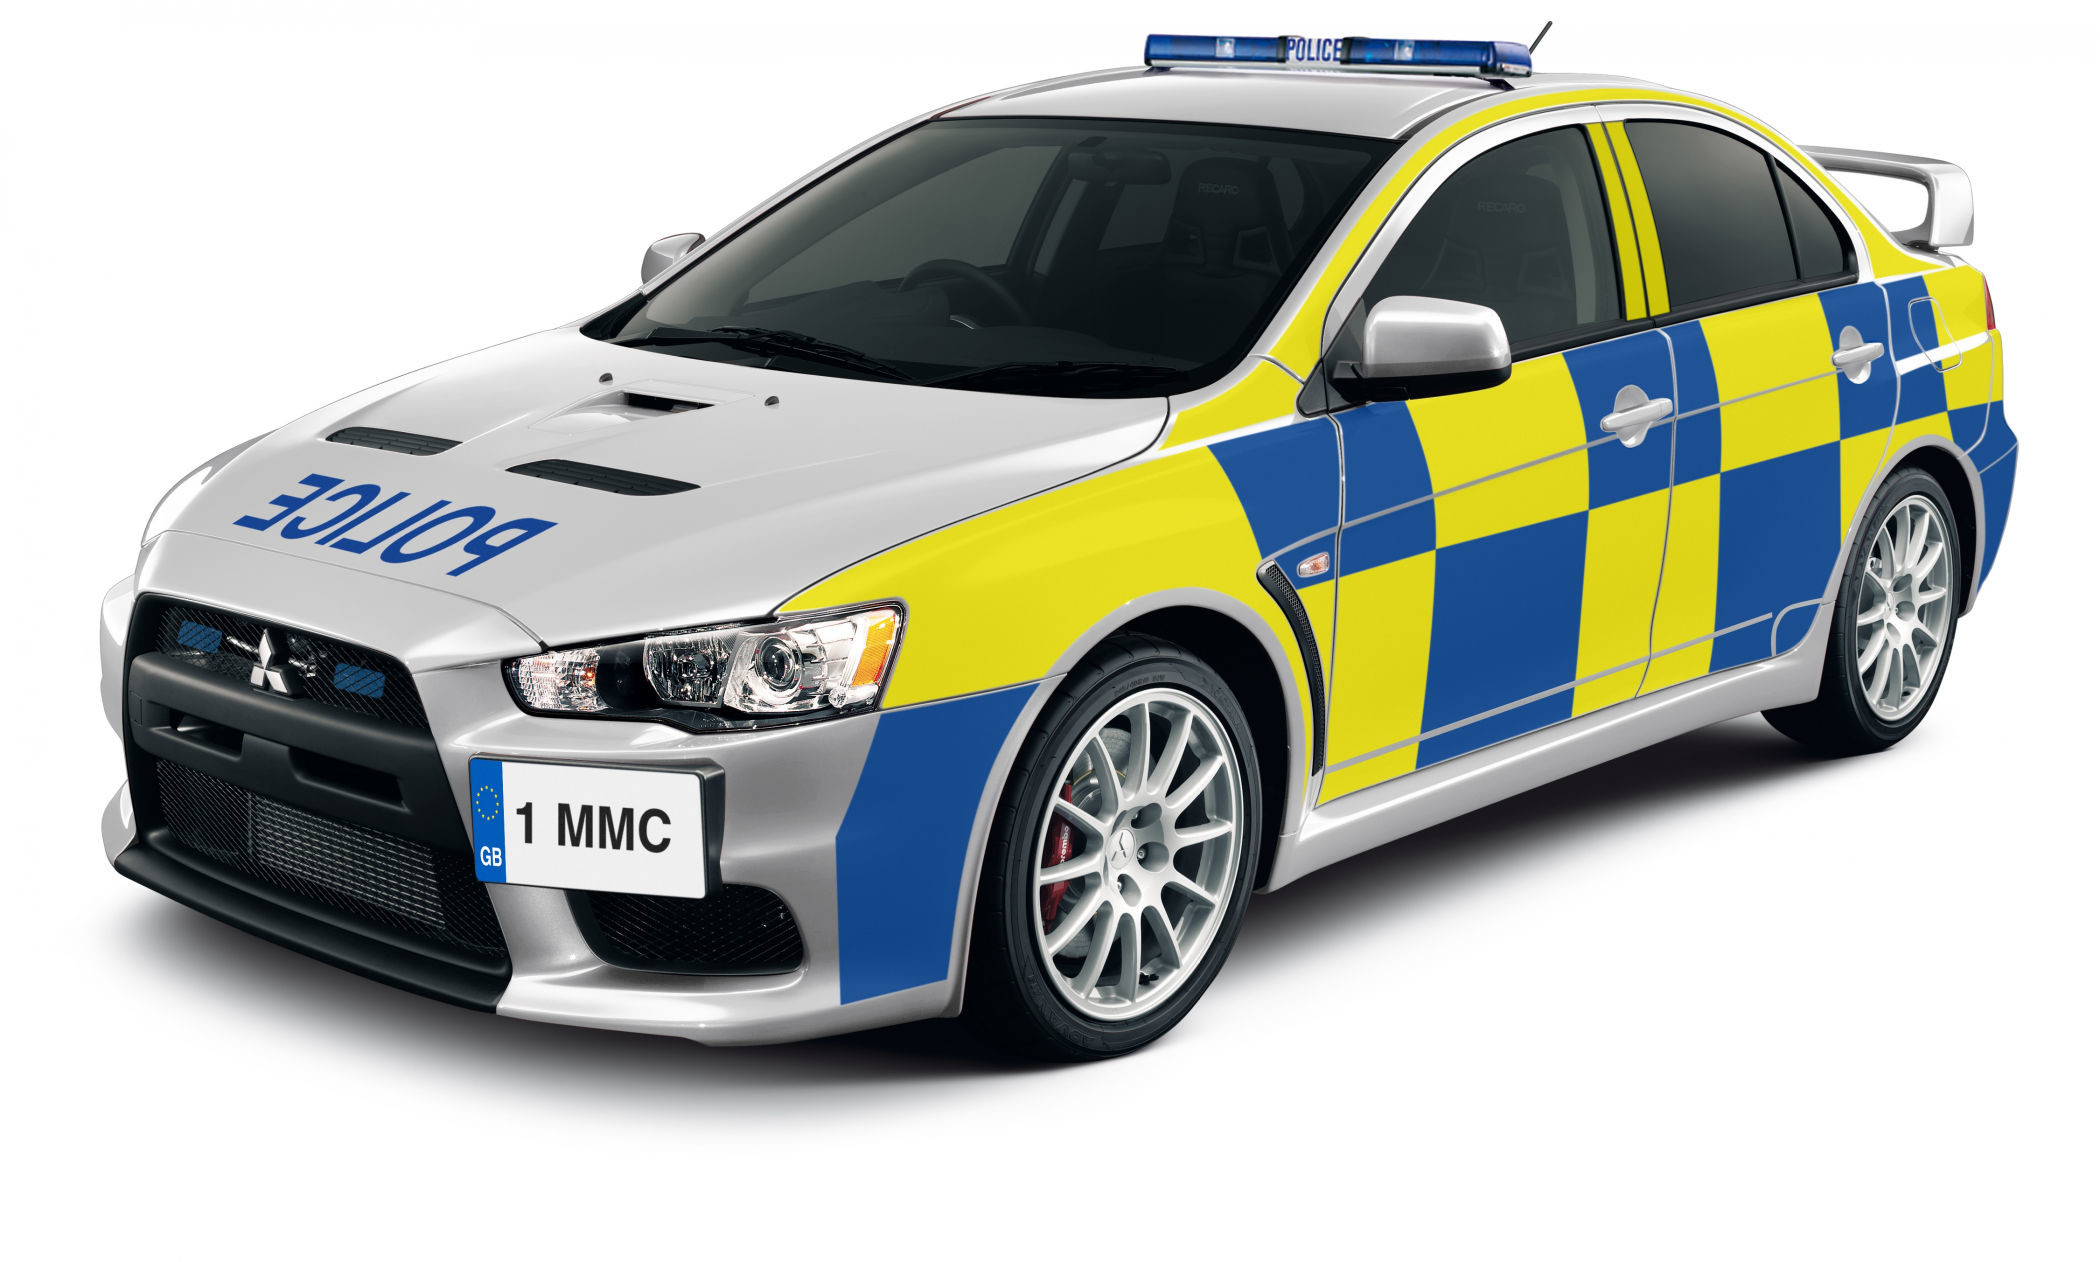 2100x1262 Police Car Hd Lancer Evolution X Uk Pic High Res 281052 Wallpaper wallpaper